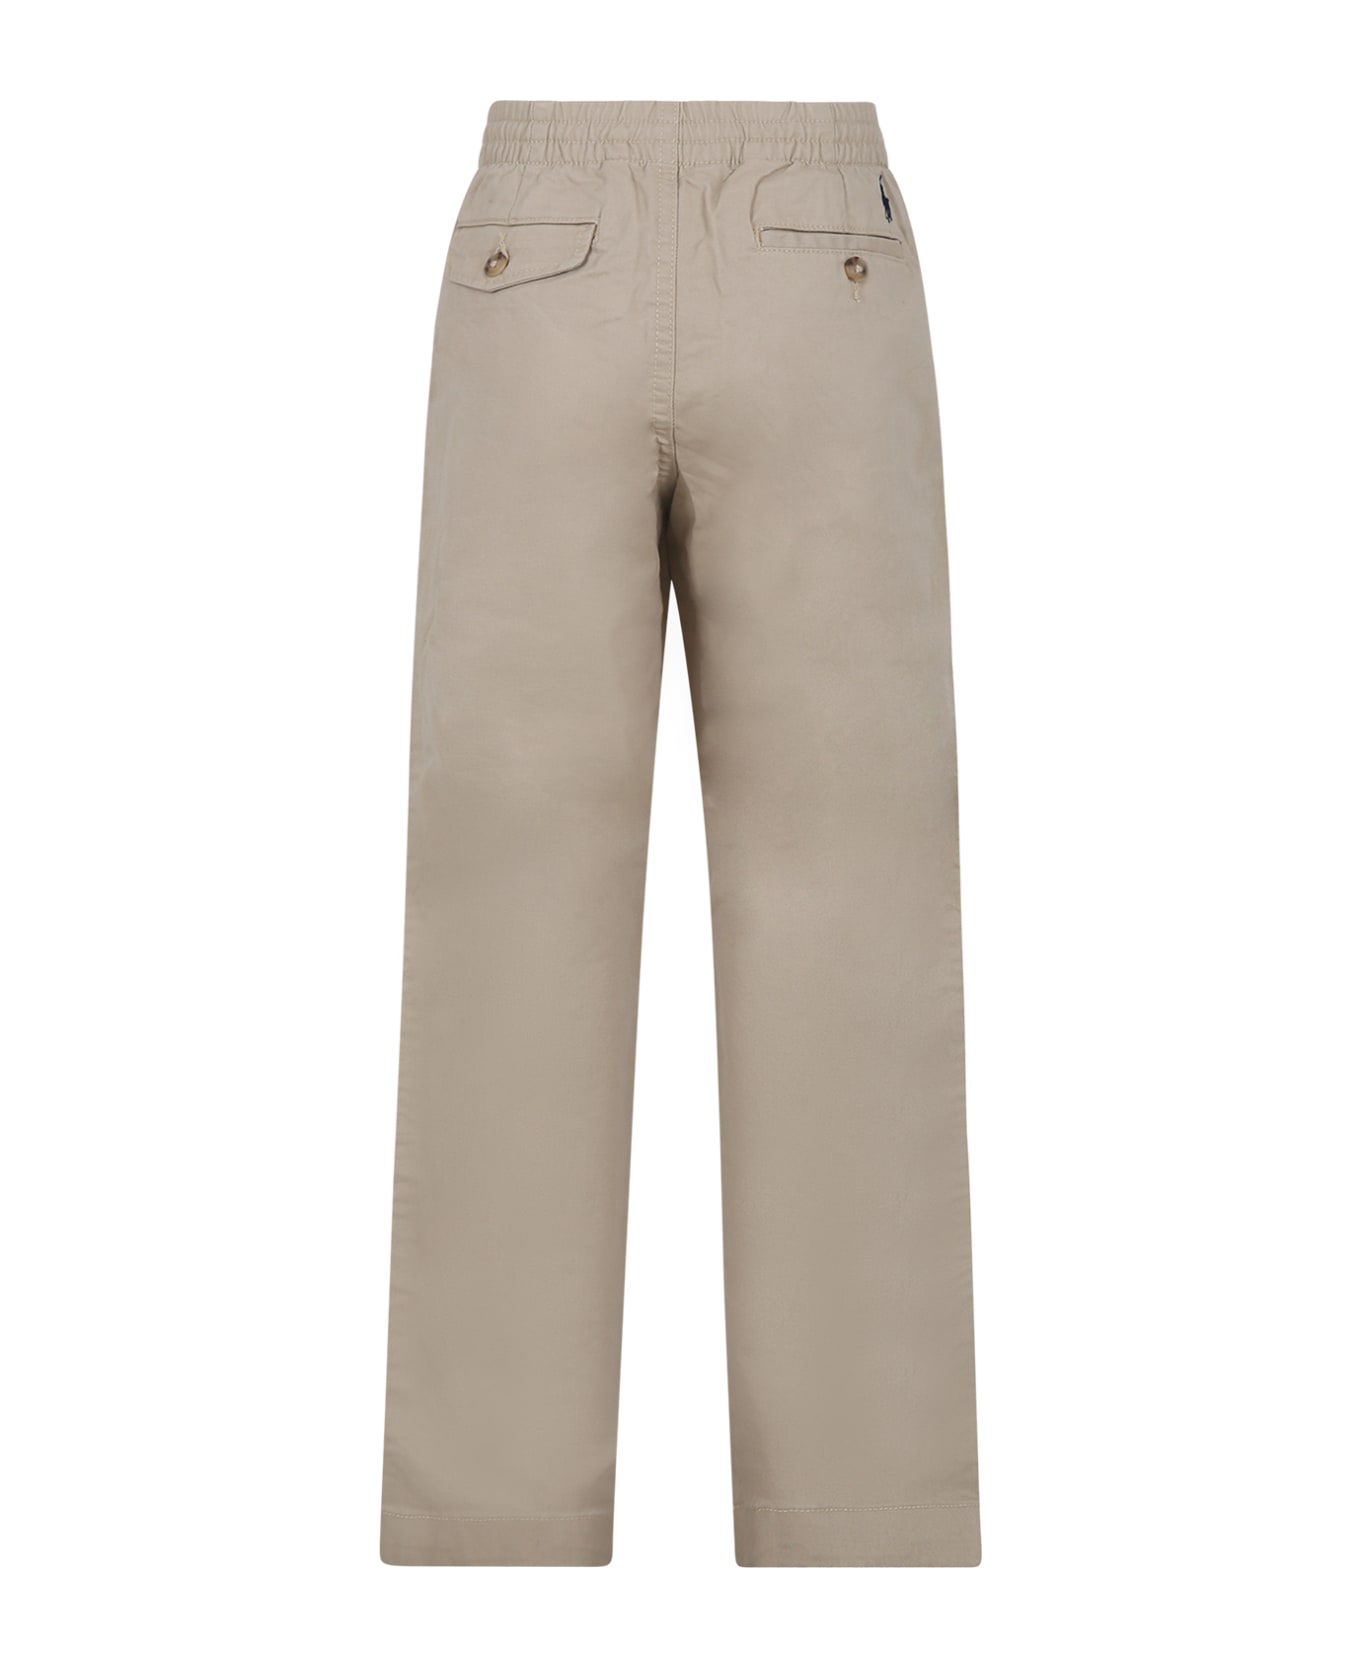 Ralph Lauren Beige Trouser For Boy With Pony Logo - Beige